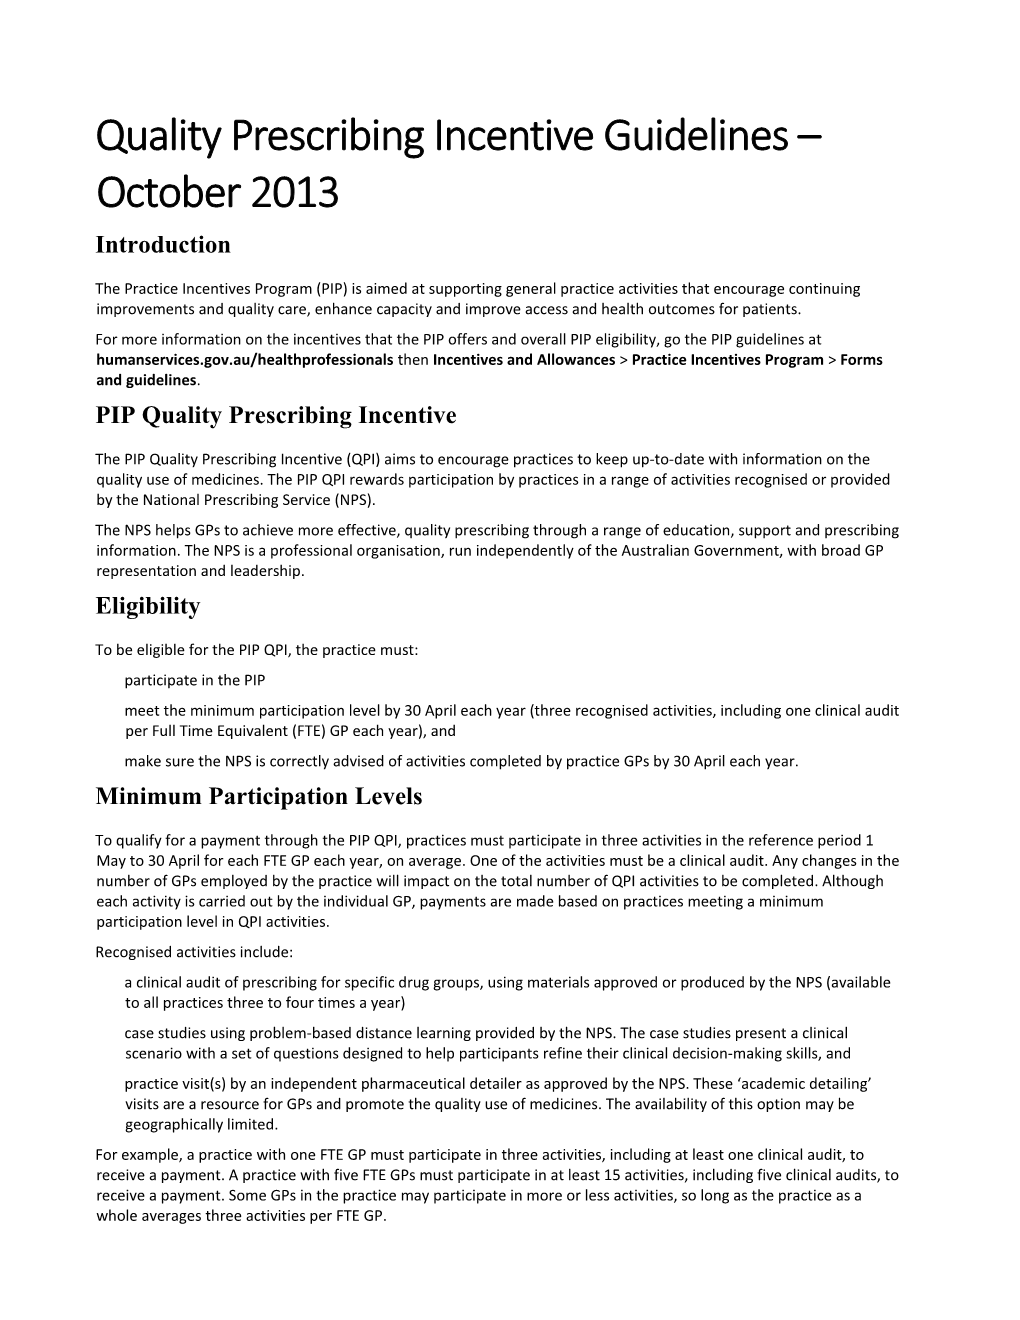 Practice Incentives Programquality Prescribing Incentive Guidelines October 2013